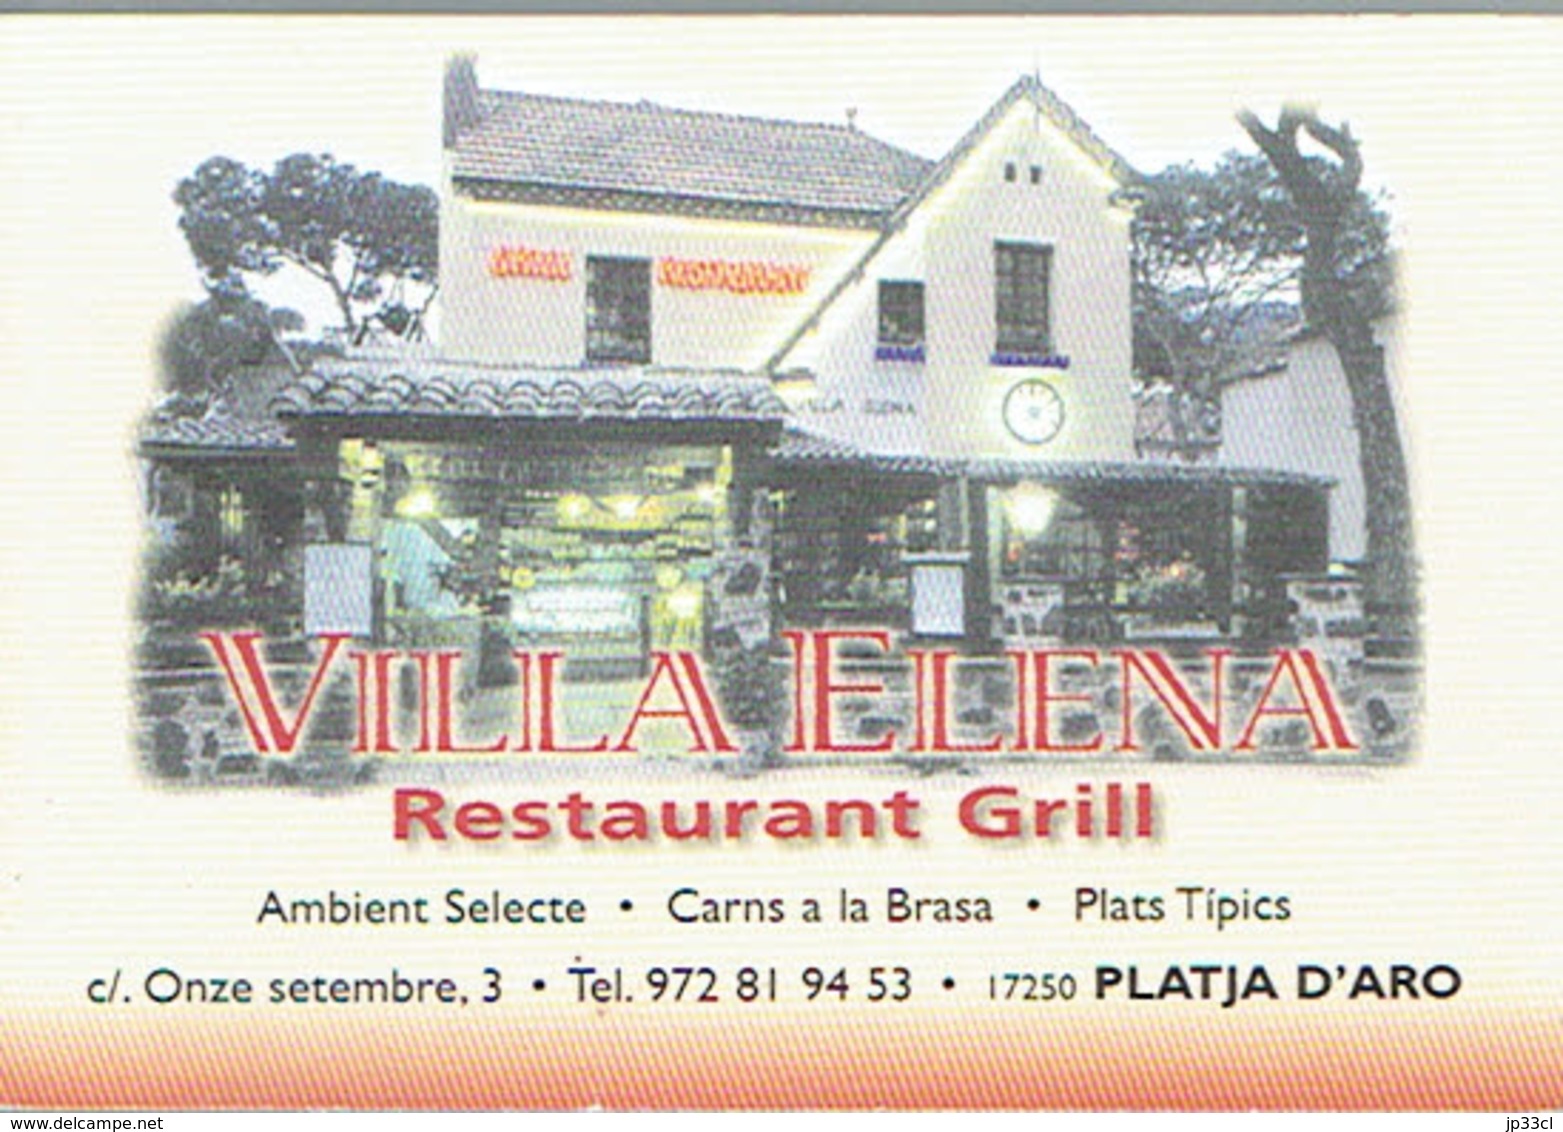 Carte De Visite Du Restaurant Grill Villa Elena, Playa De Aro (Espagne) Vers 1999/2000 - Visitekaartjes